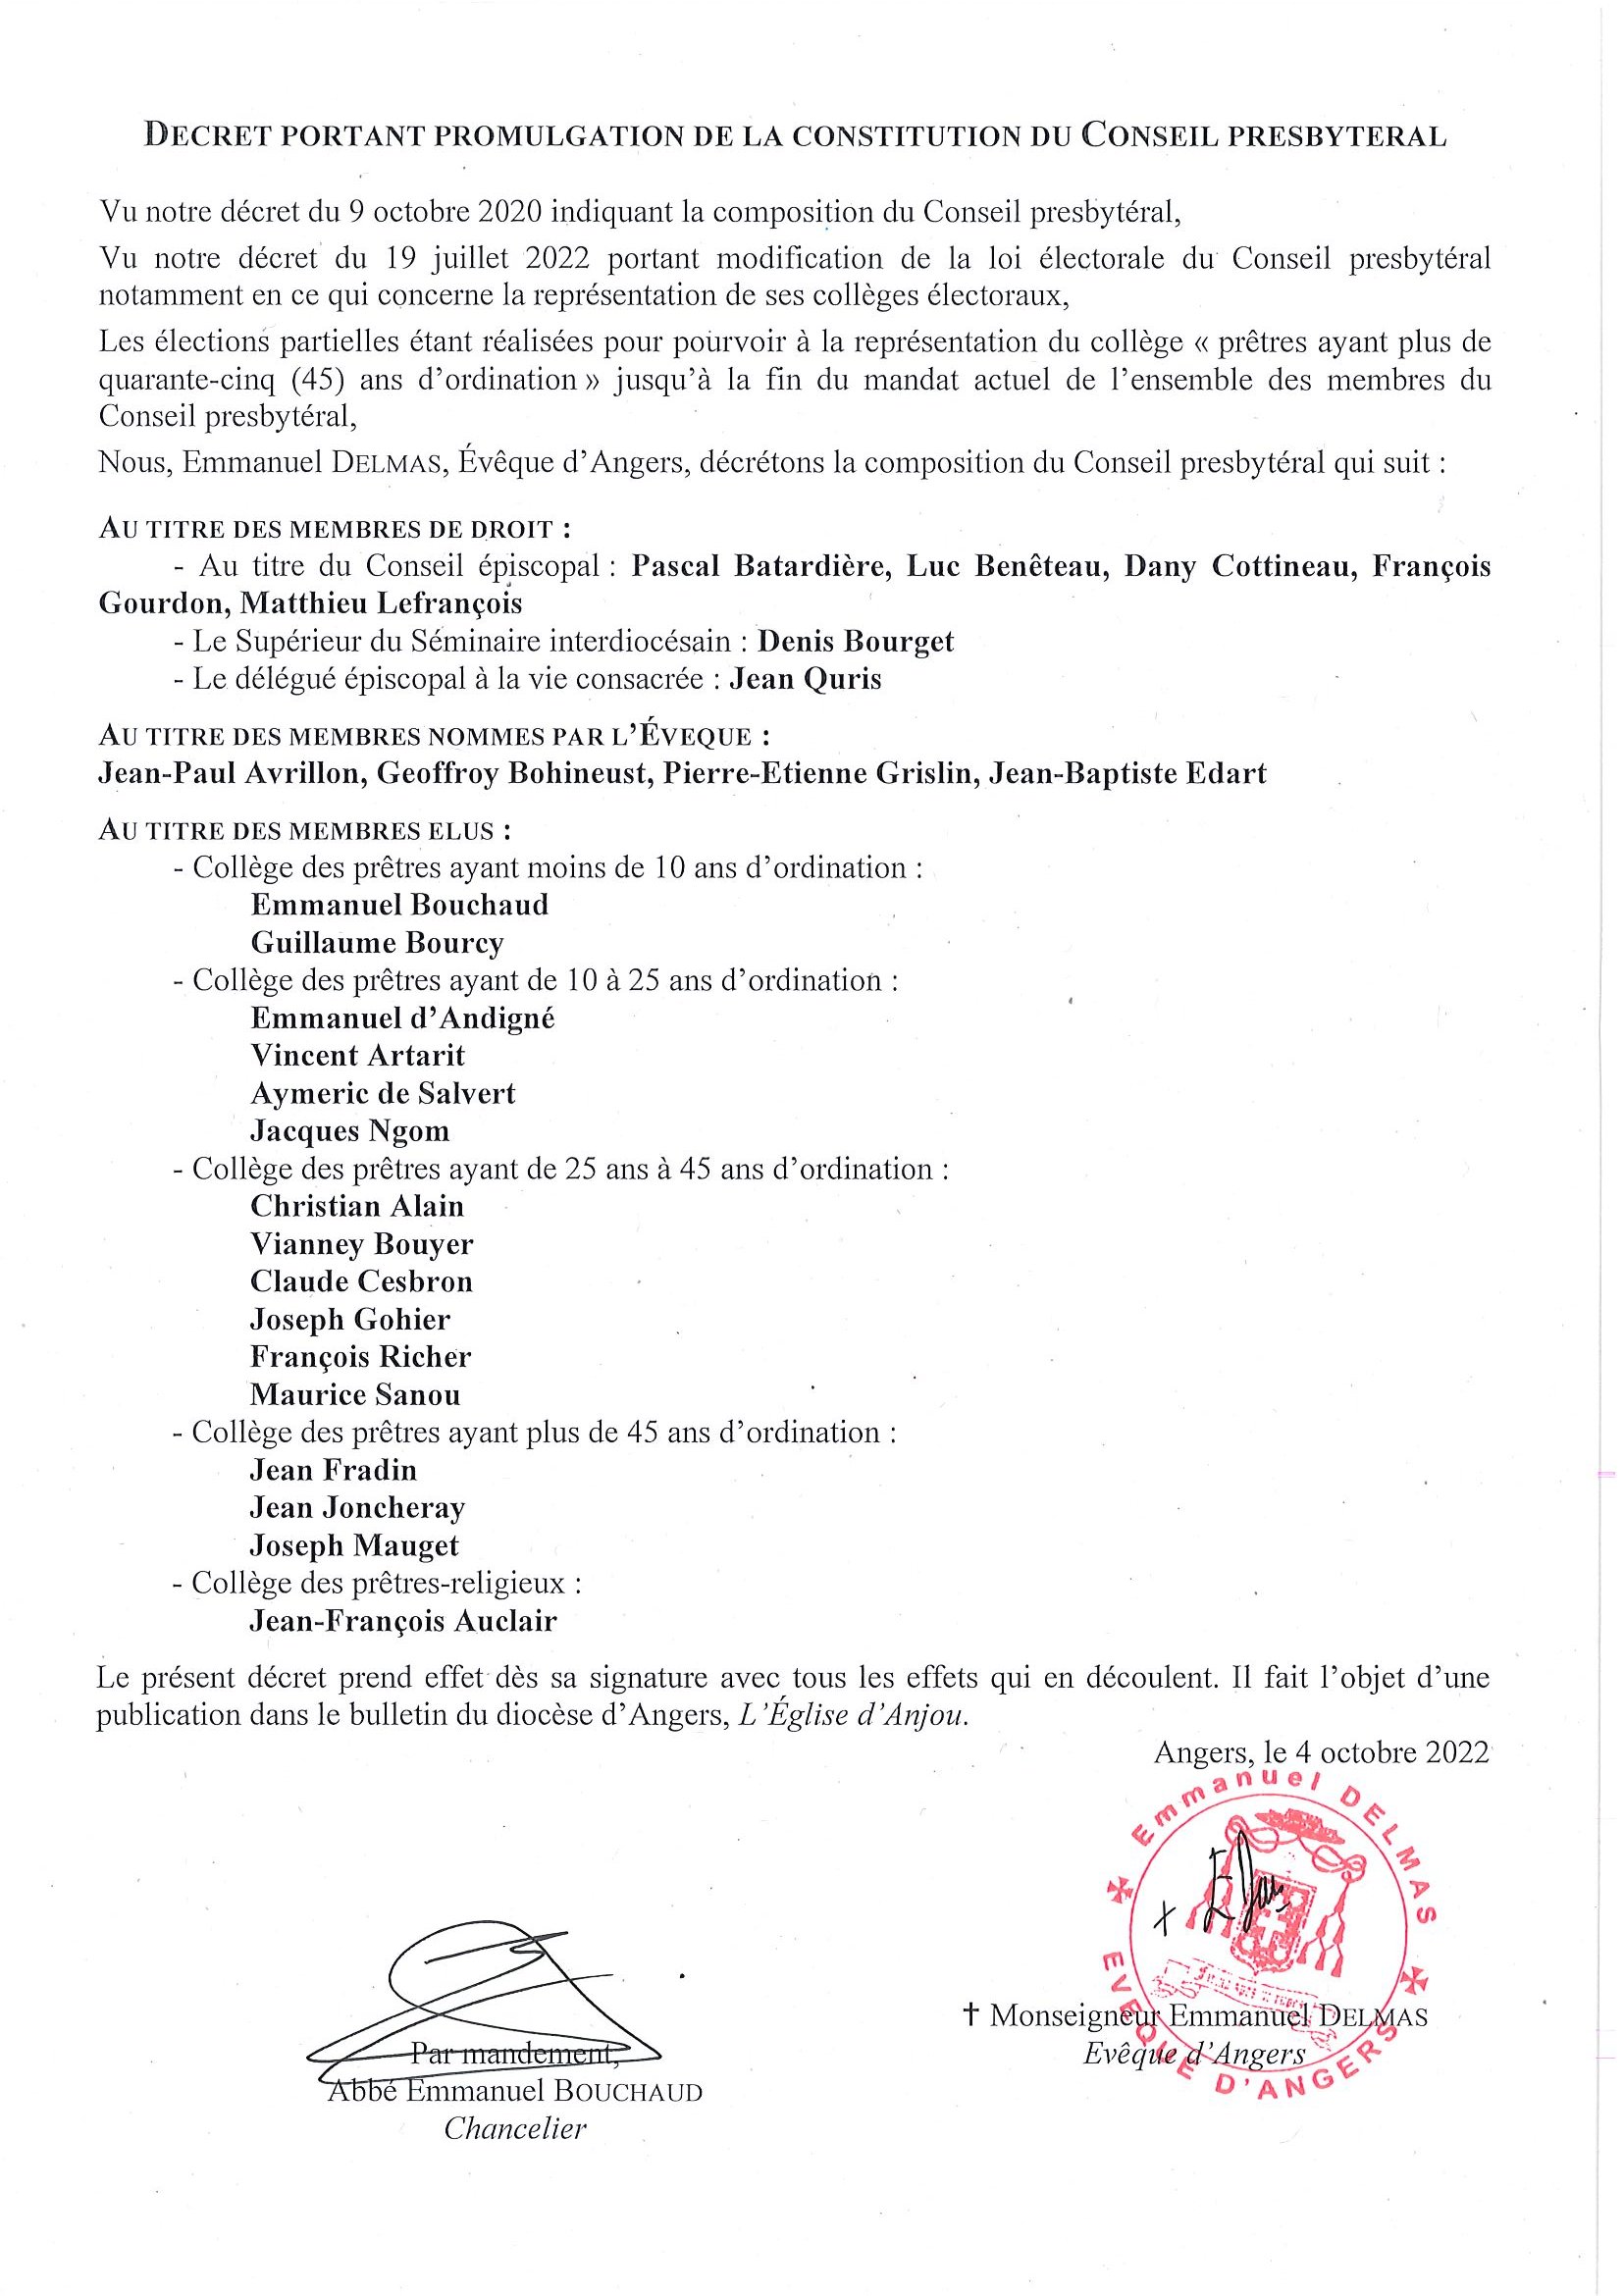 20221004_decret_promulgation_constitution_du_conseil_presbyteral-r270.jpg